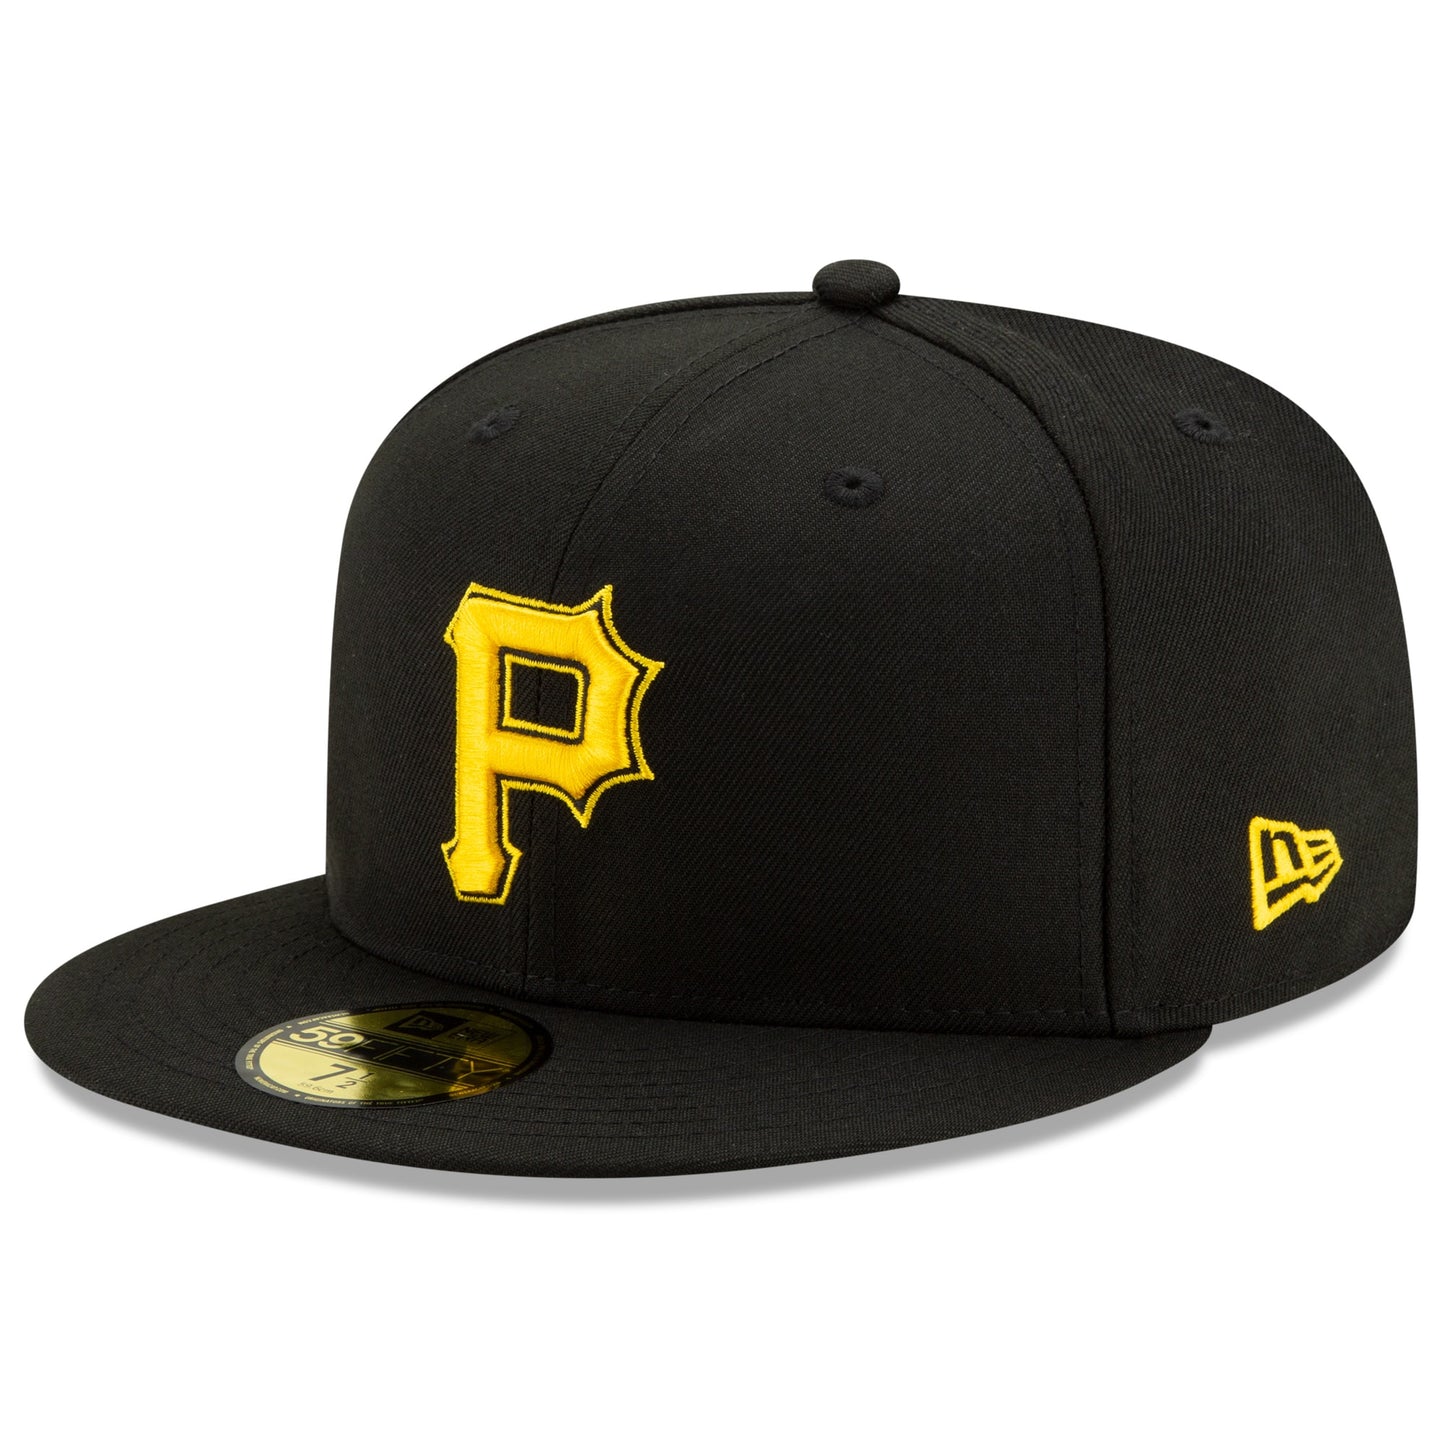 New Era 59FIFTY Pittsburgh Pirates